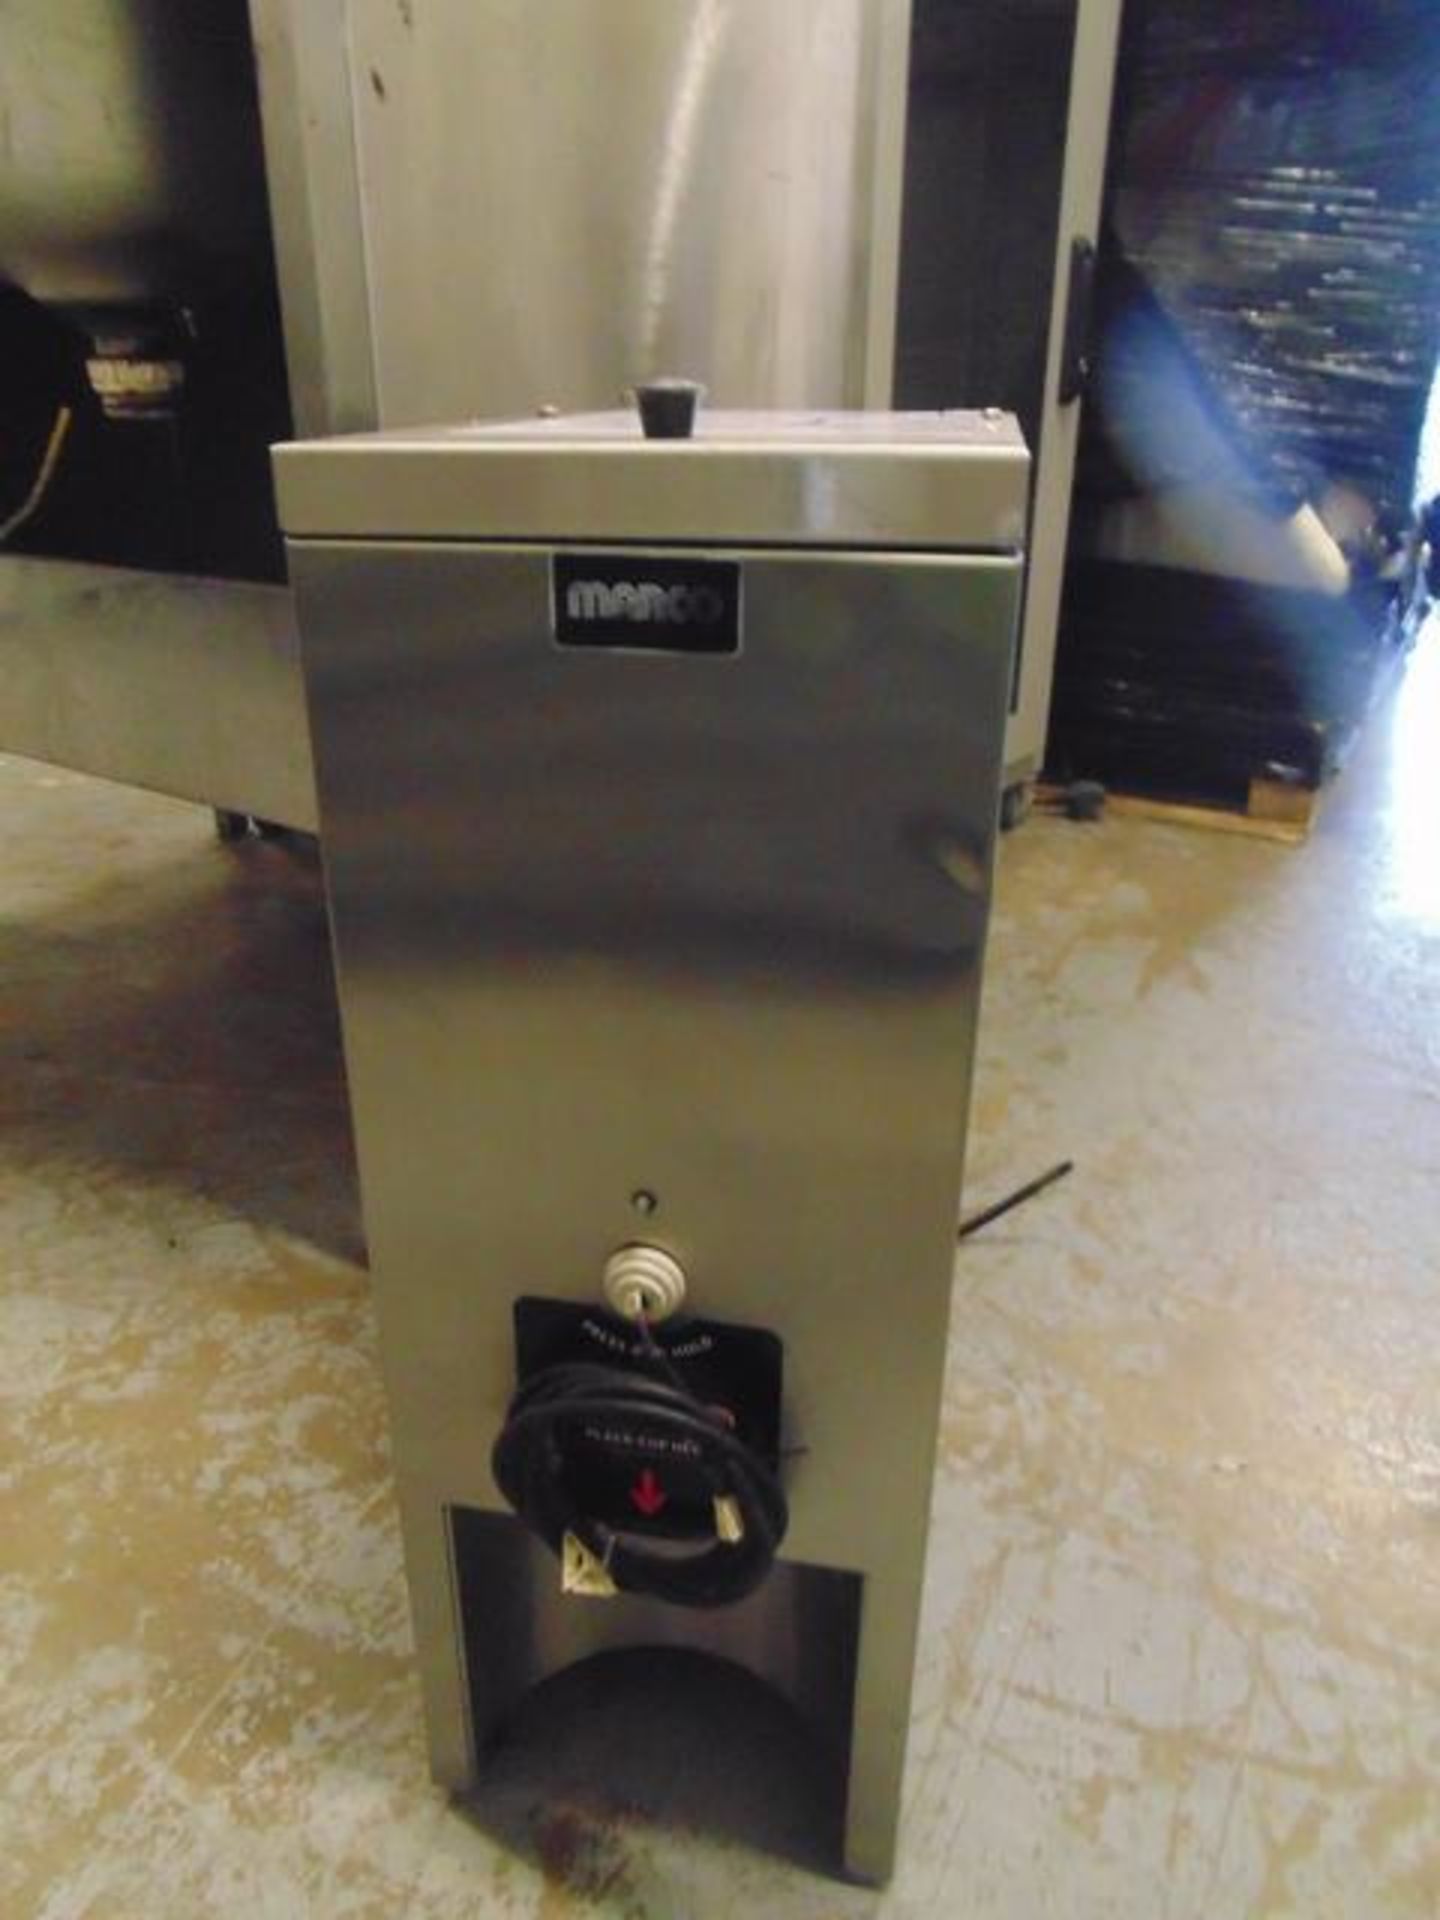 Libra 5 hot water boiler push button hot water dispense compact design to maximize counter space